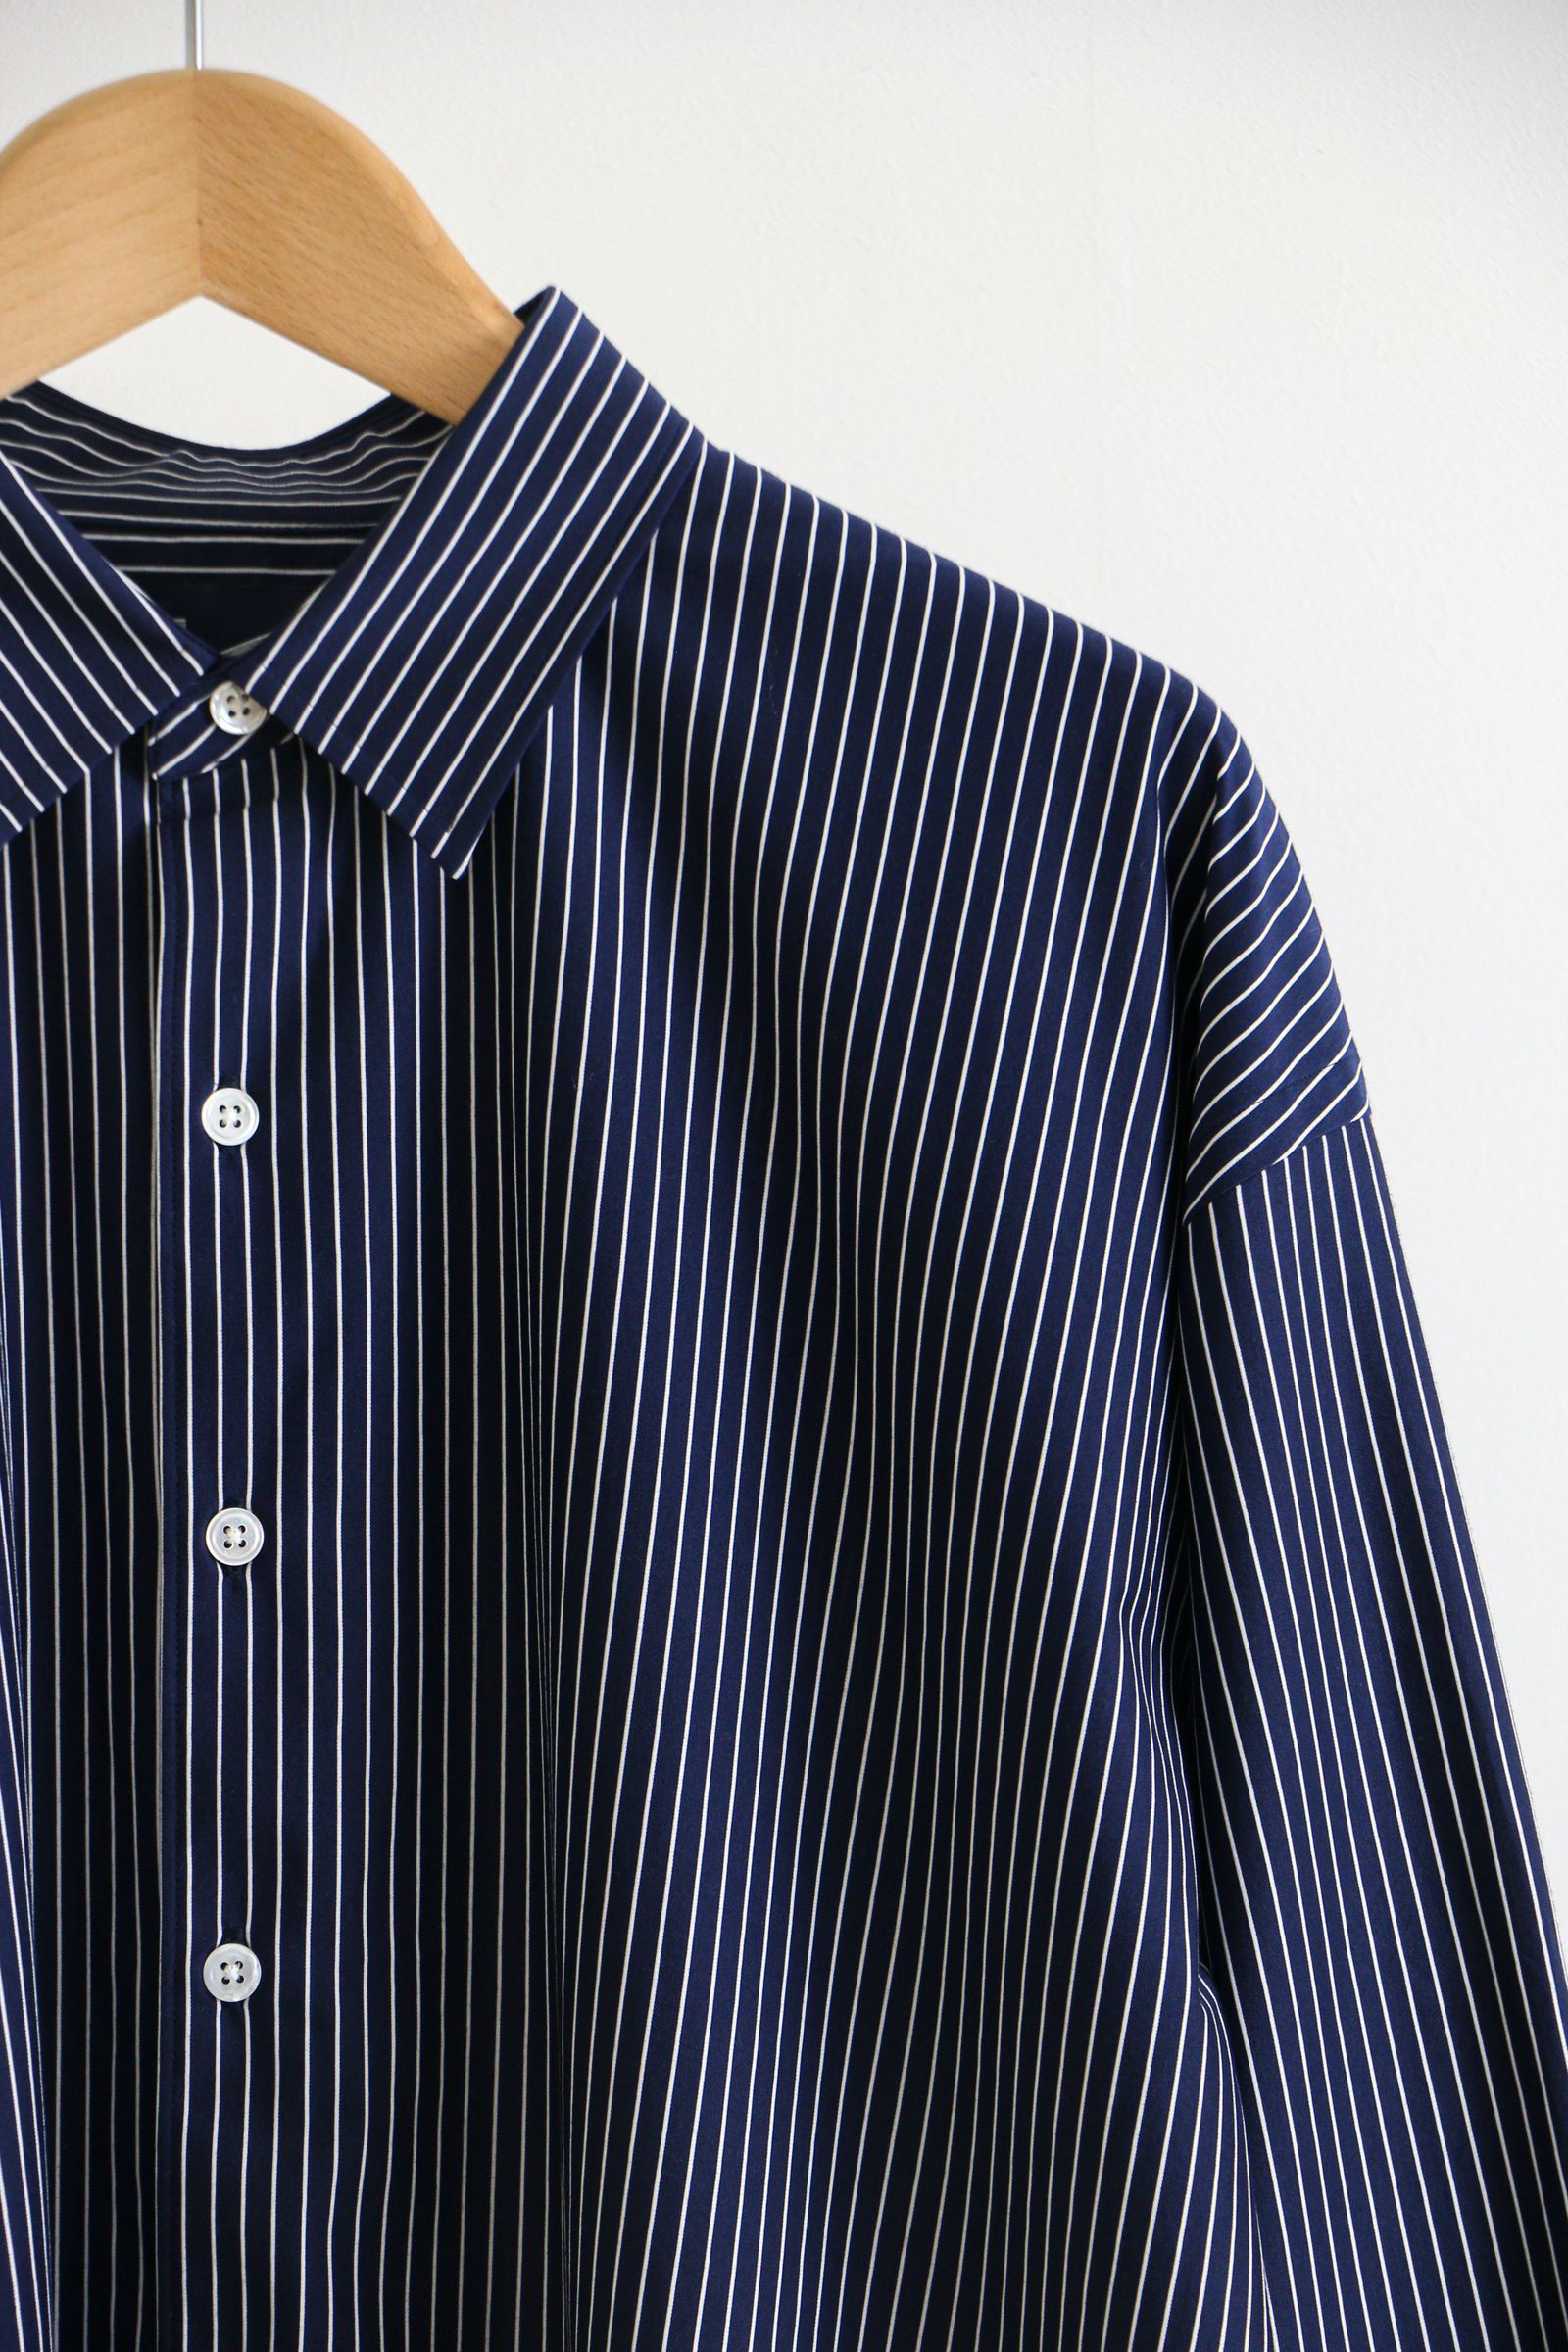 Pencil Stripe Dress Jersey Shirt / NAVY SP /オーバーサイズ / シャツ / ストライプ - M